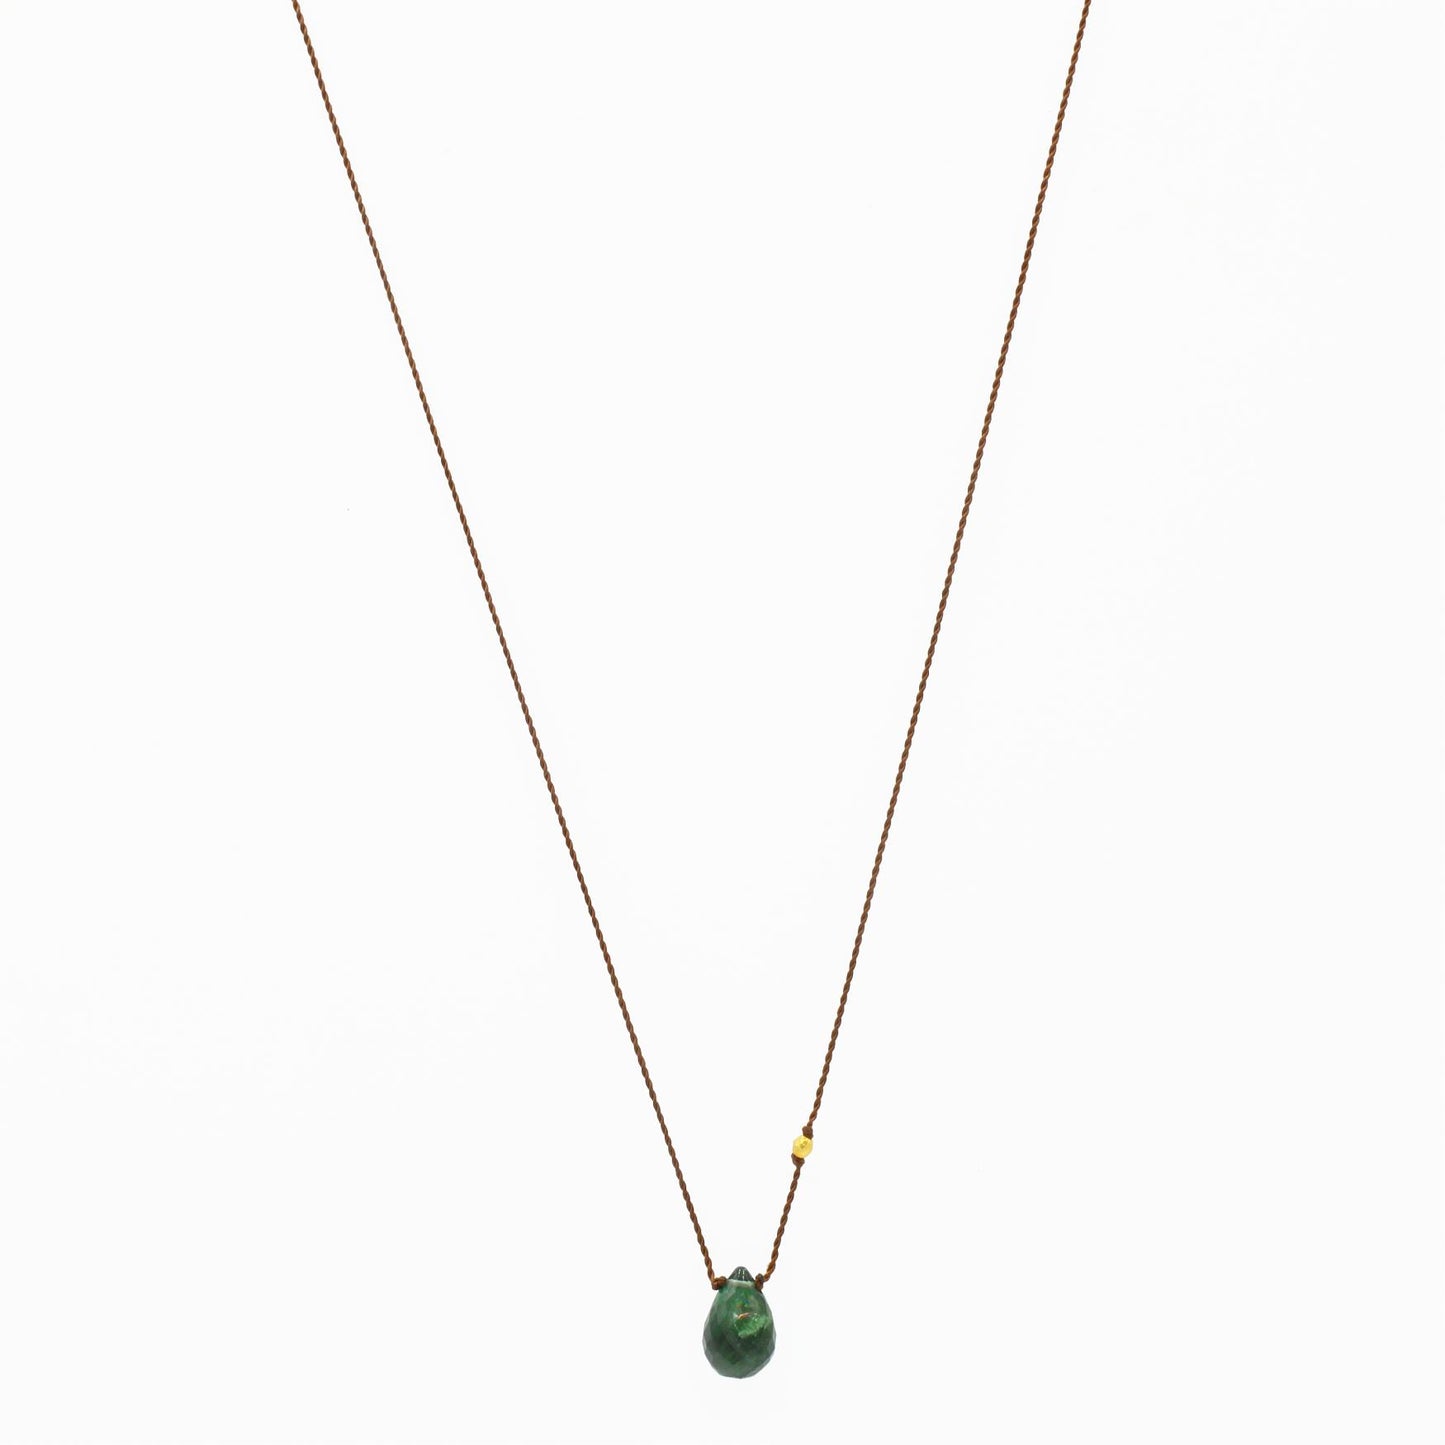 Margaret Solow Jewelry | Tourmaline "Zen Gem" Necklace | Firecracker